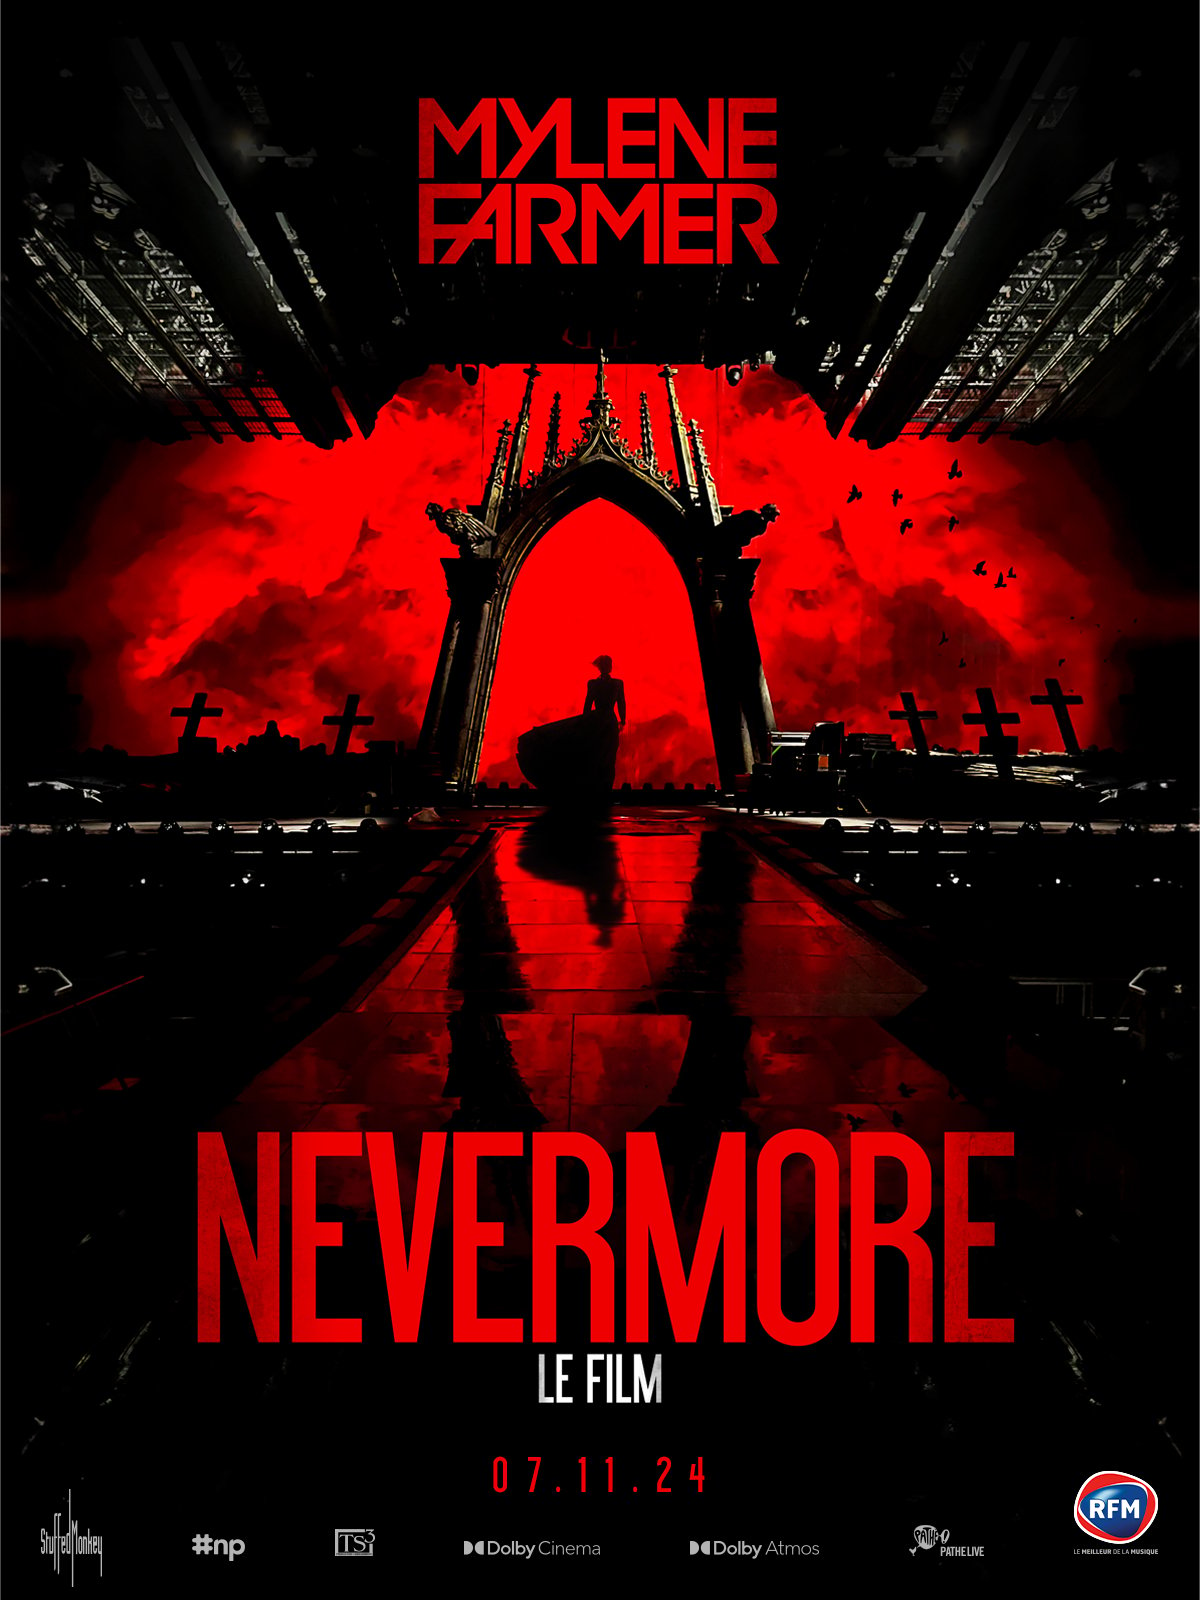 Mylène Farmer Nevermore le film